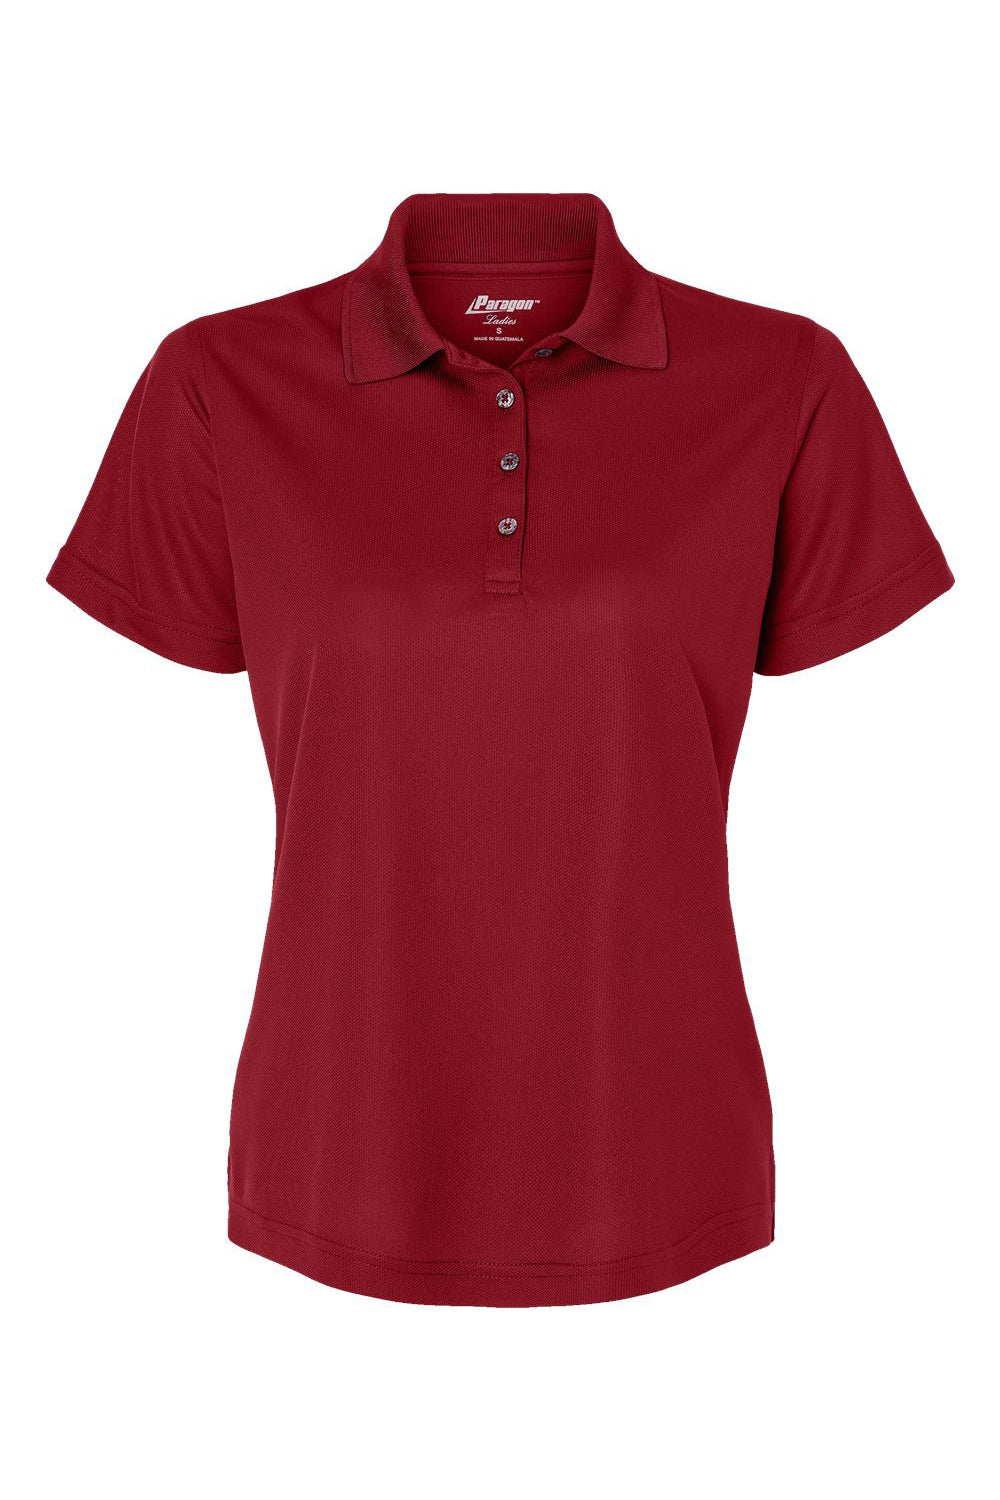 Paragon 104 Womens Saratoga Performance Mini Mesh Short Sleeve Polo Shirt Cardinal Red Flat Front